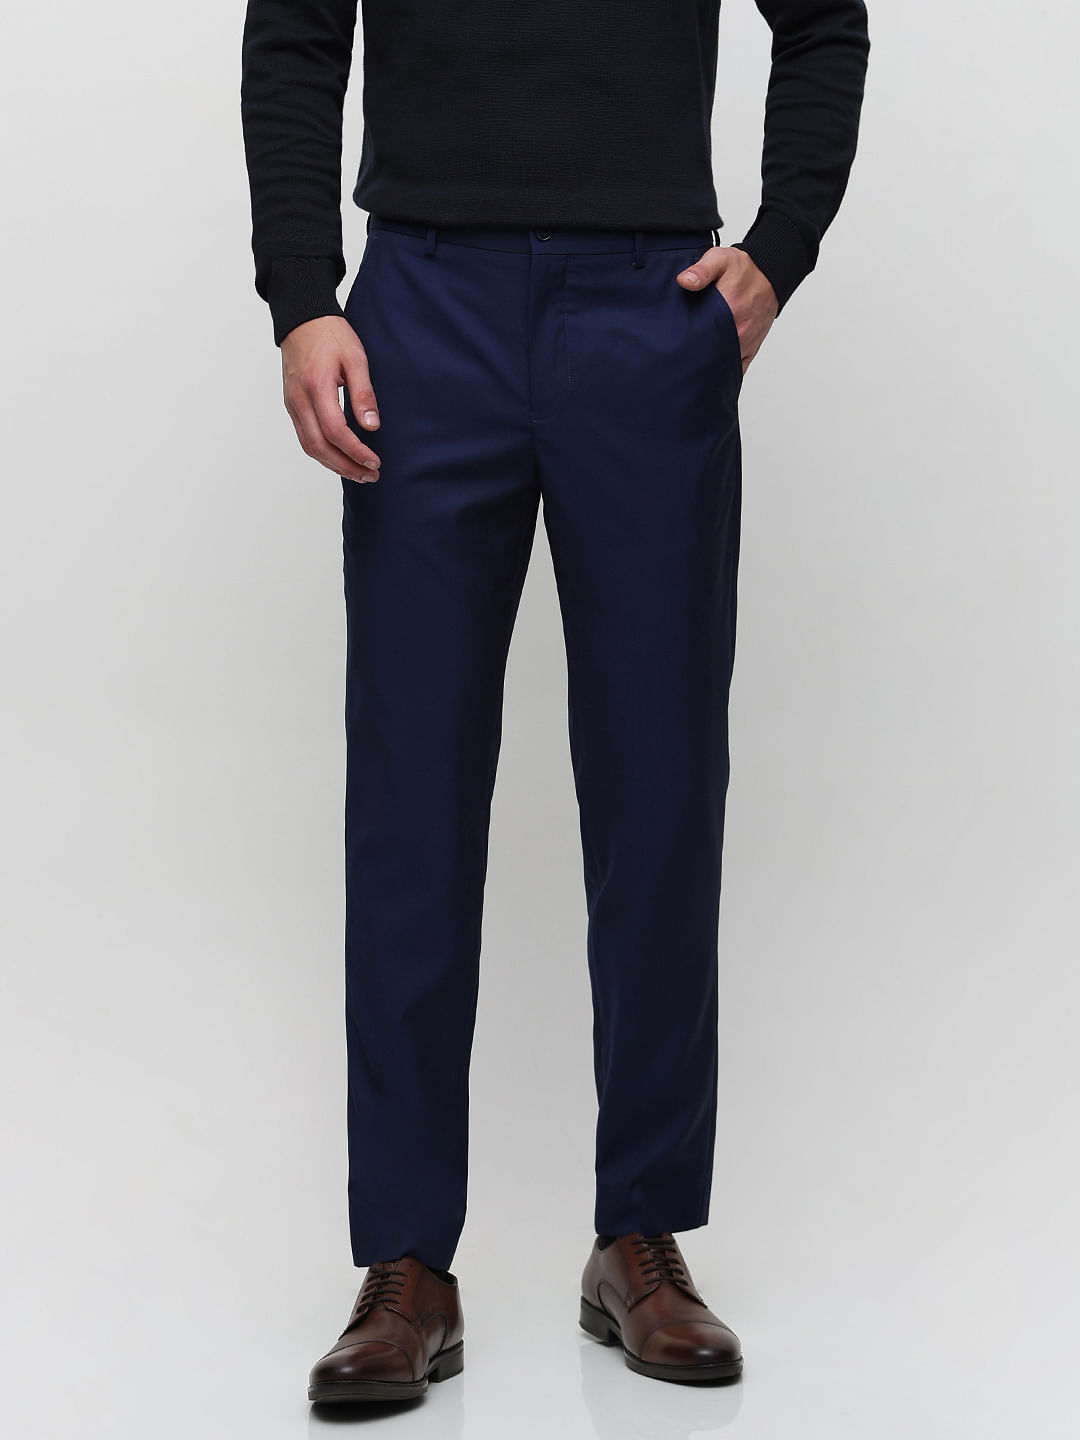 Buy BKRKJ Men's Woollen Check Self pattern Unstitched Trouser Fabric in  size 1.2 meter,3 meter,3.6 meter, width 58 inches (1.2 meter, Dark Blue  505) at Amazon.in